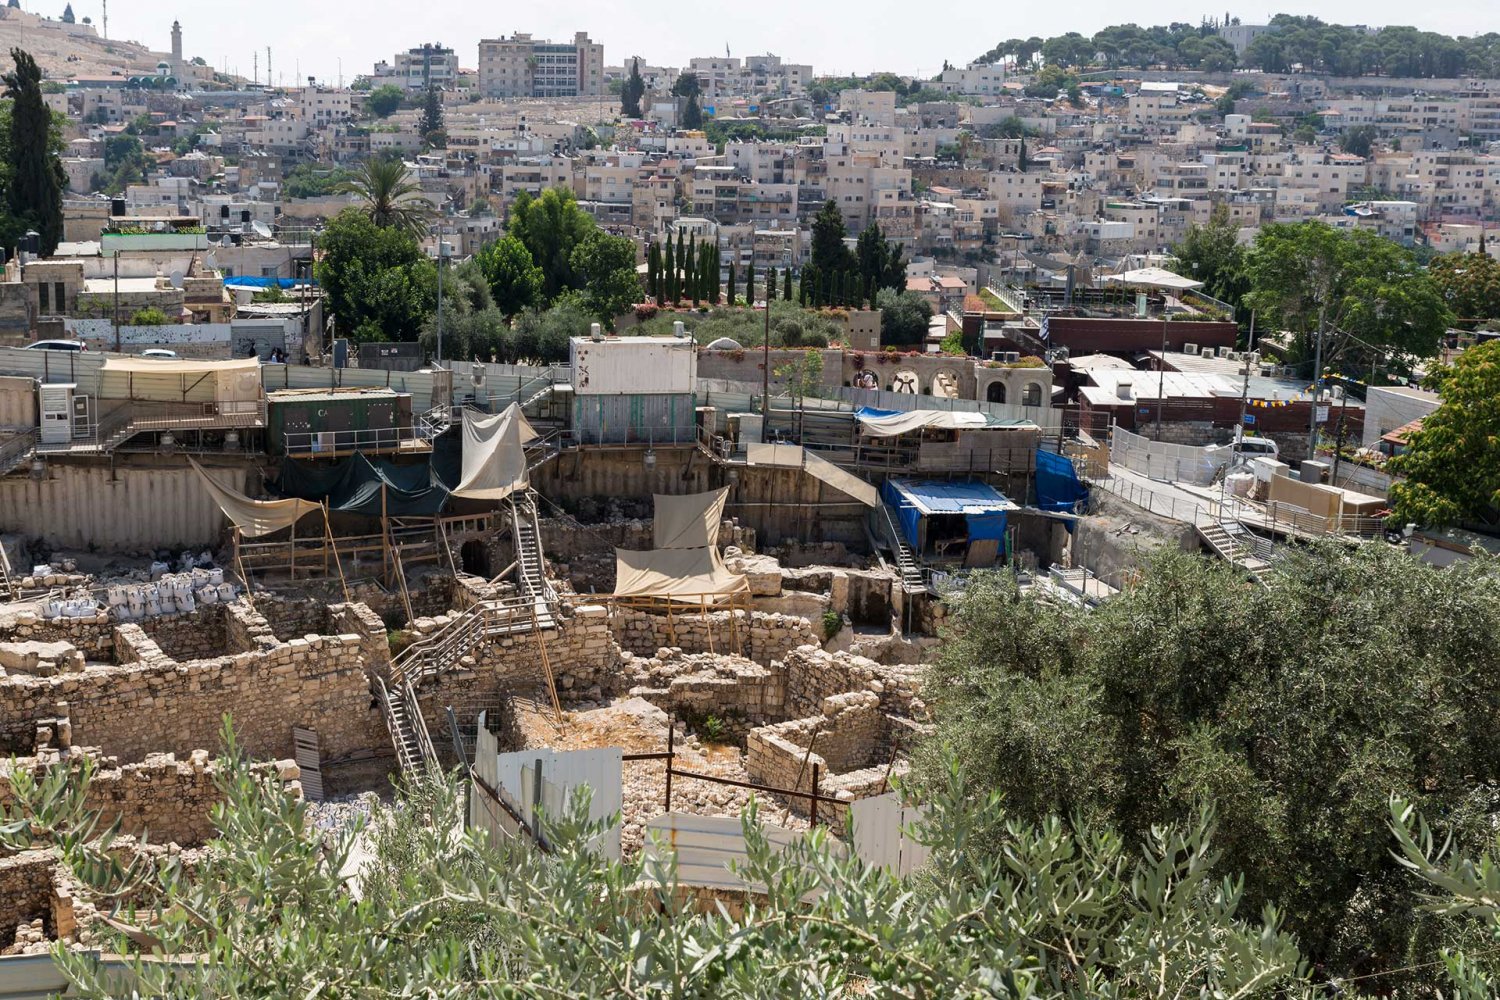 City of David excavations in Silwan, Jerusalem